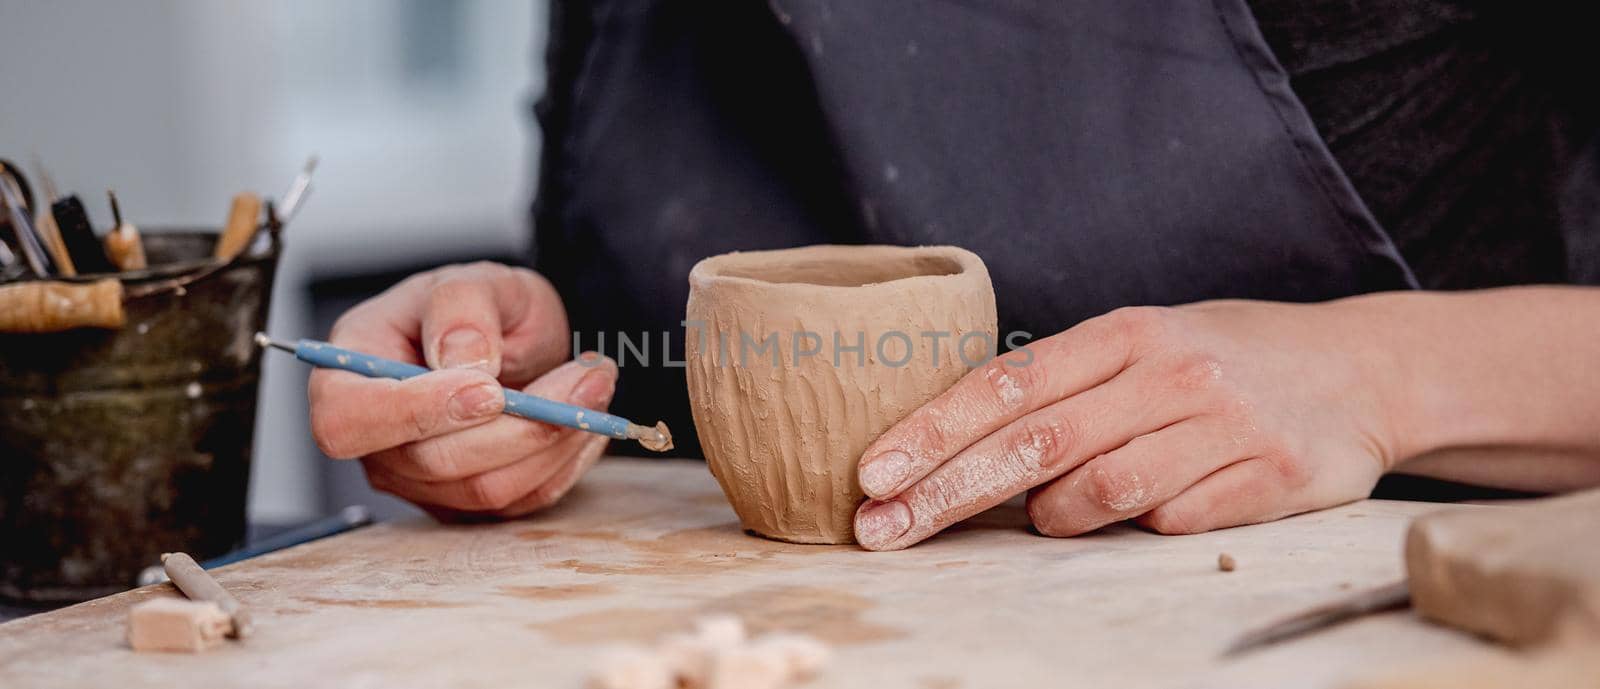 Potter using carving tool on mug by tan4ikk1